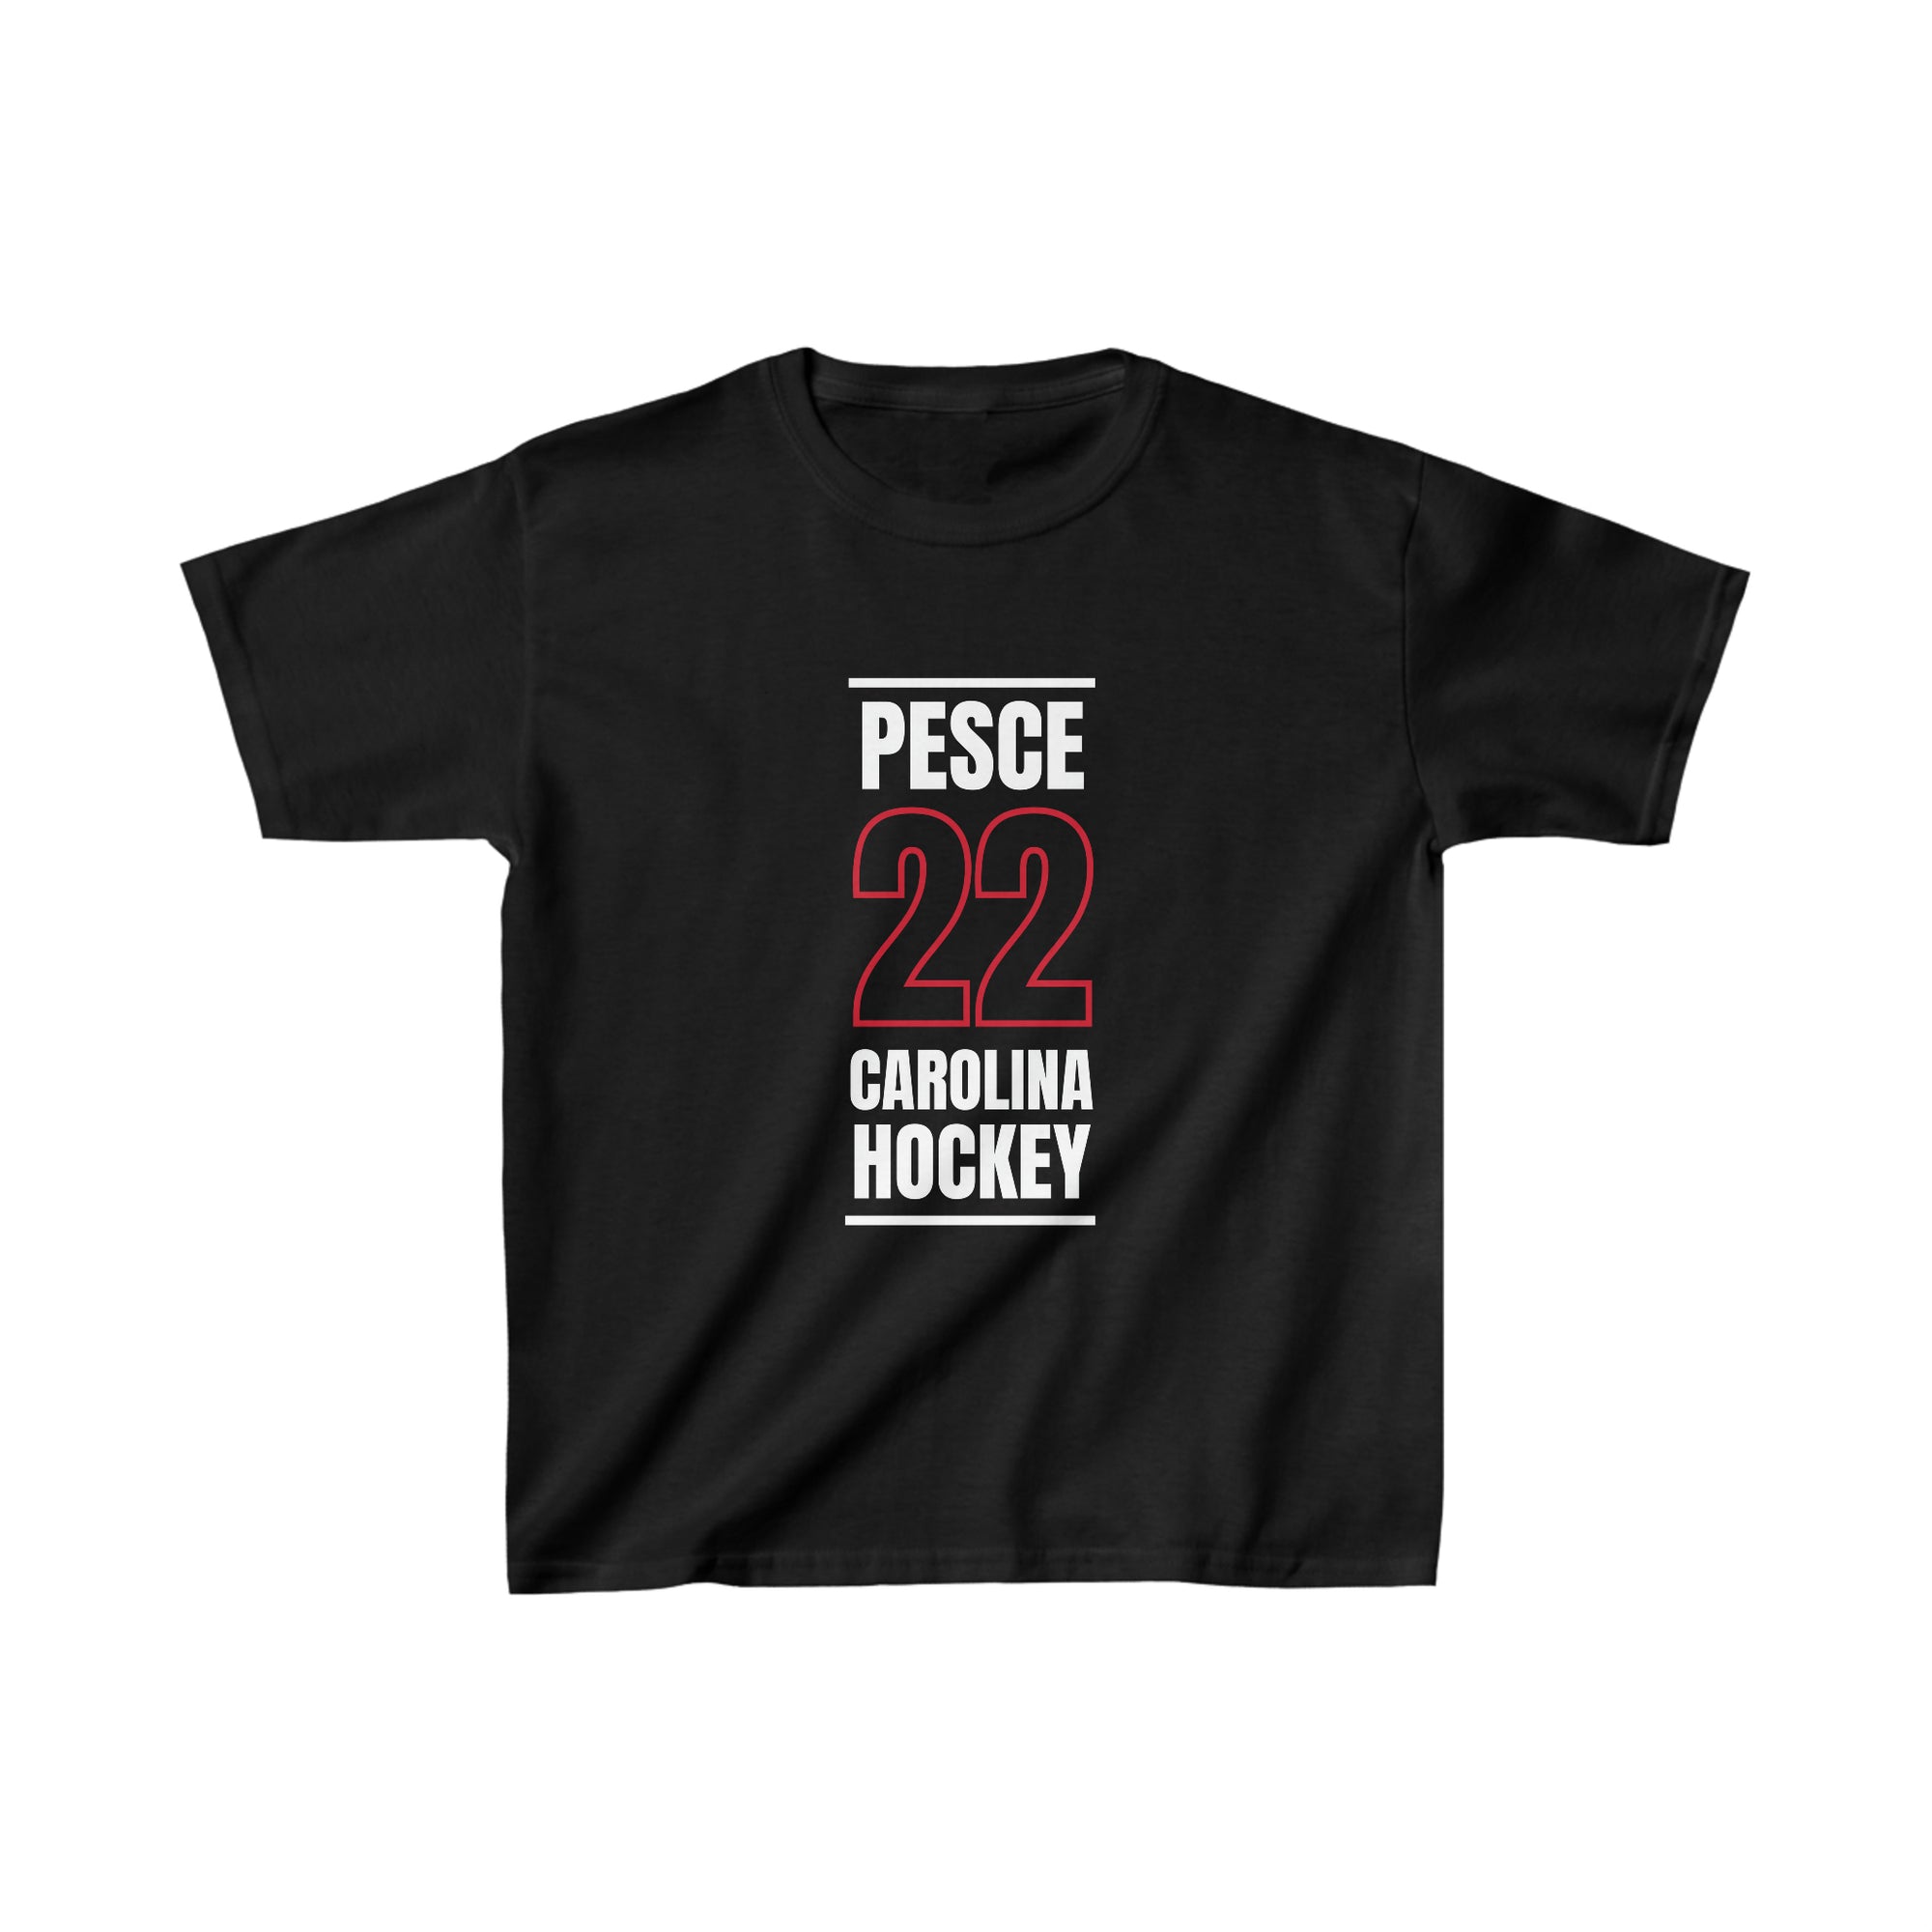 Pesce 22 Carolina Hockey Black Vertical Design Kids Tee